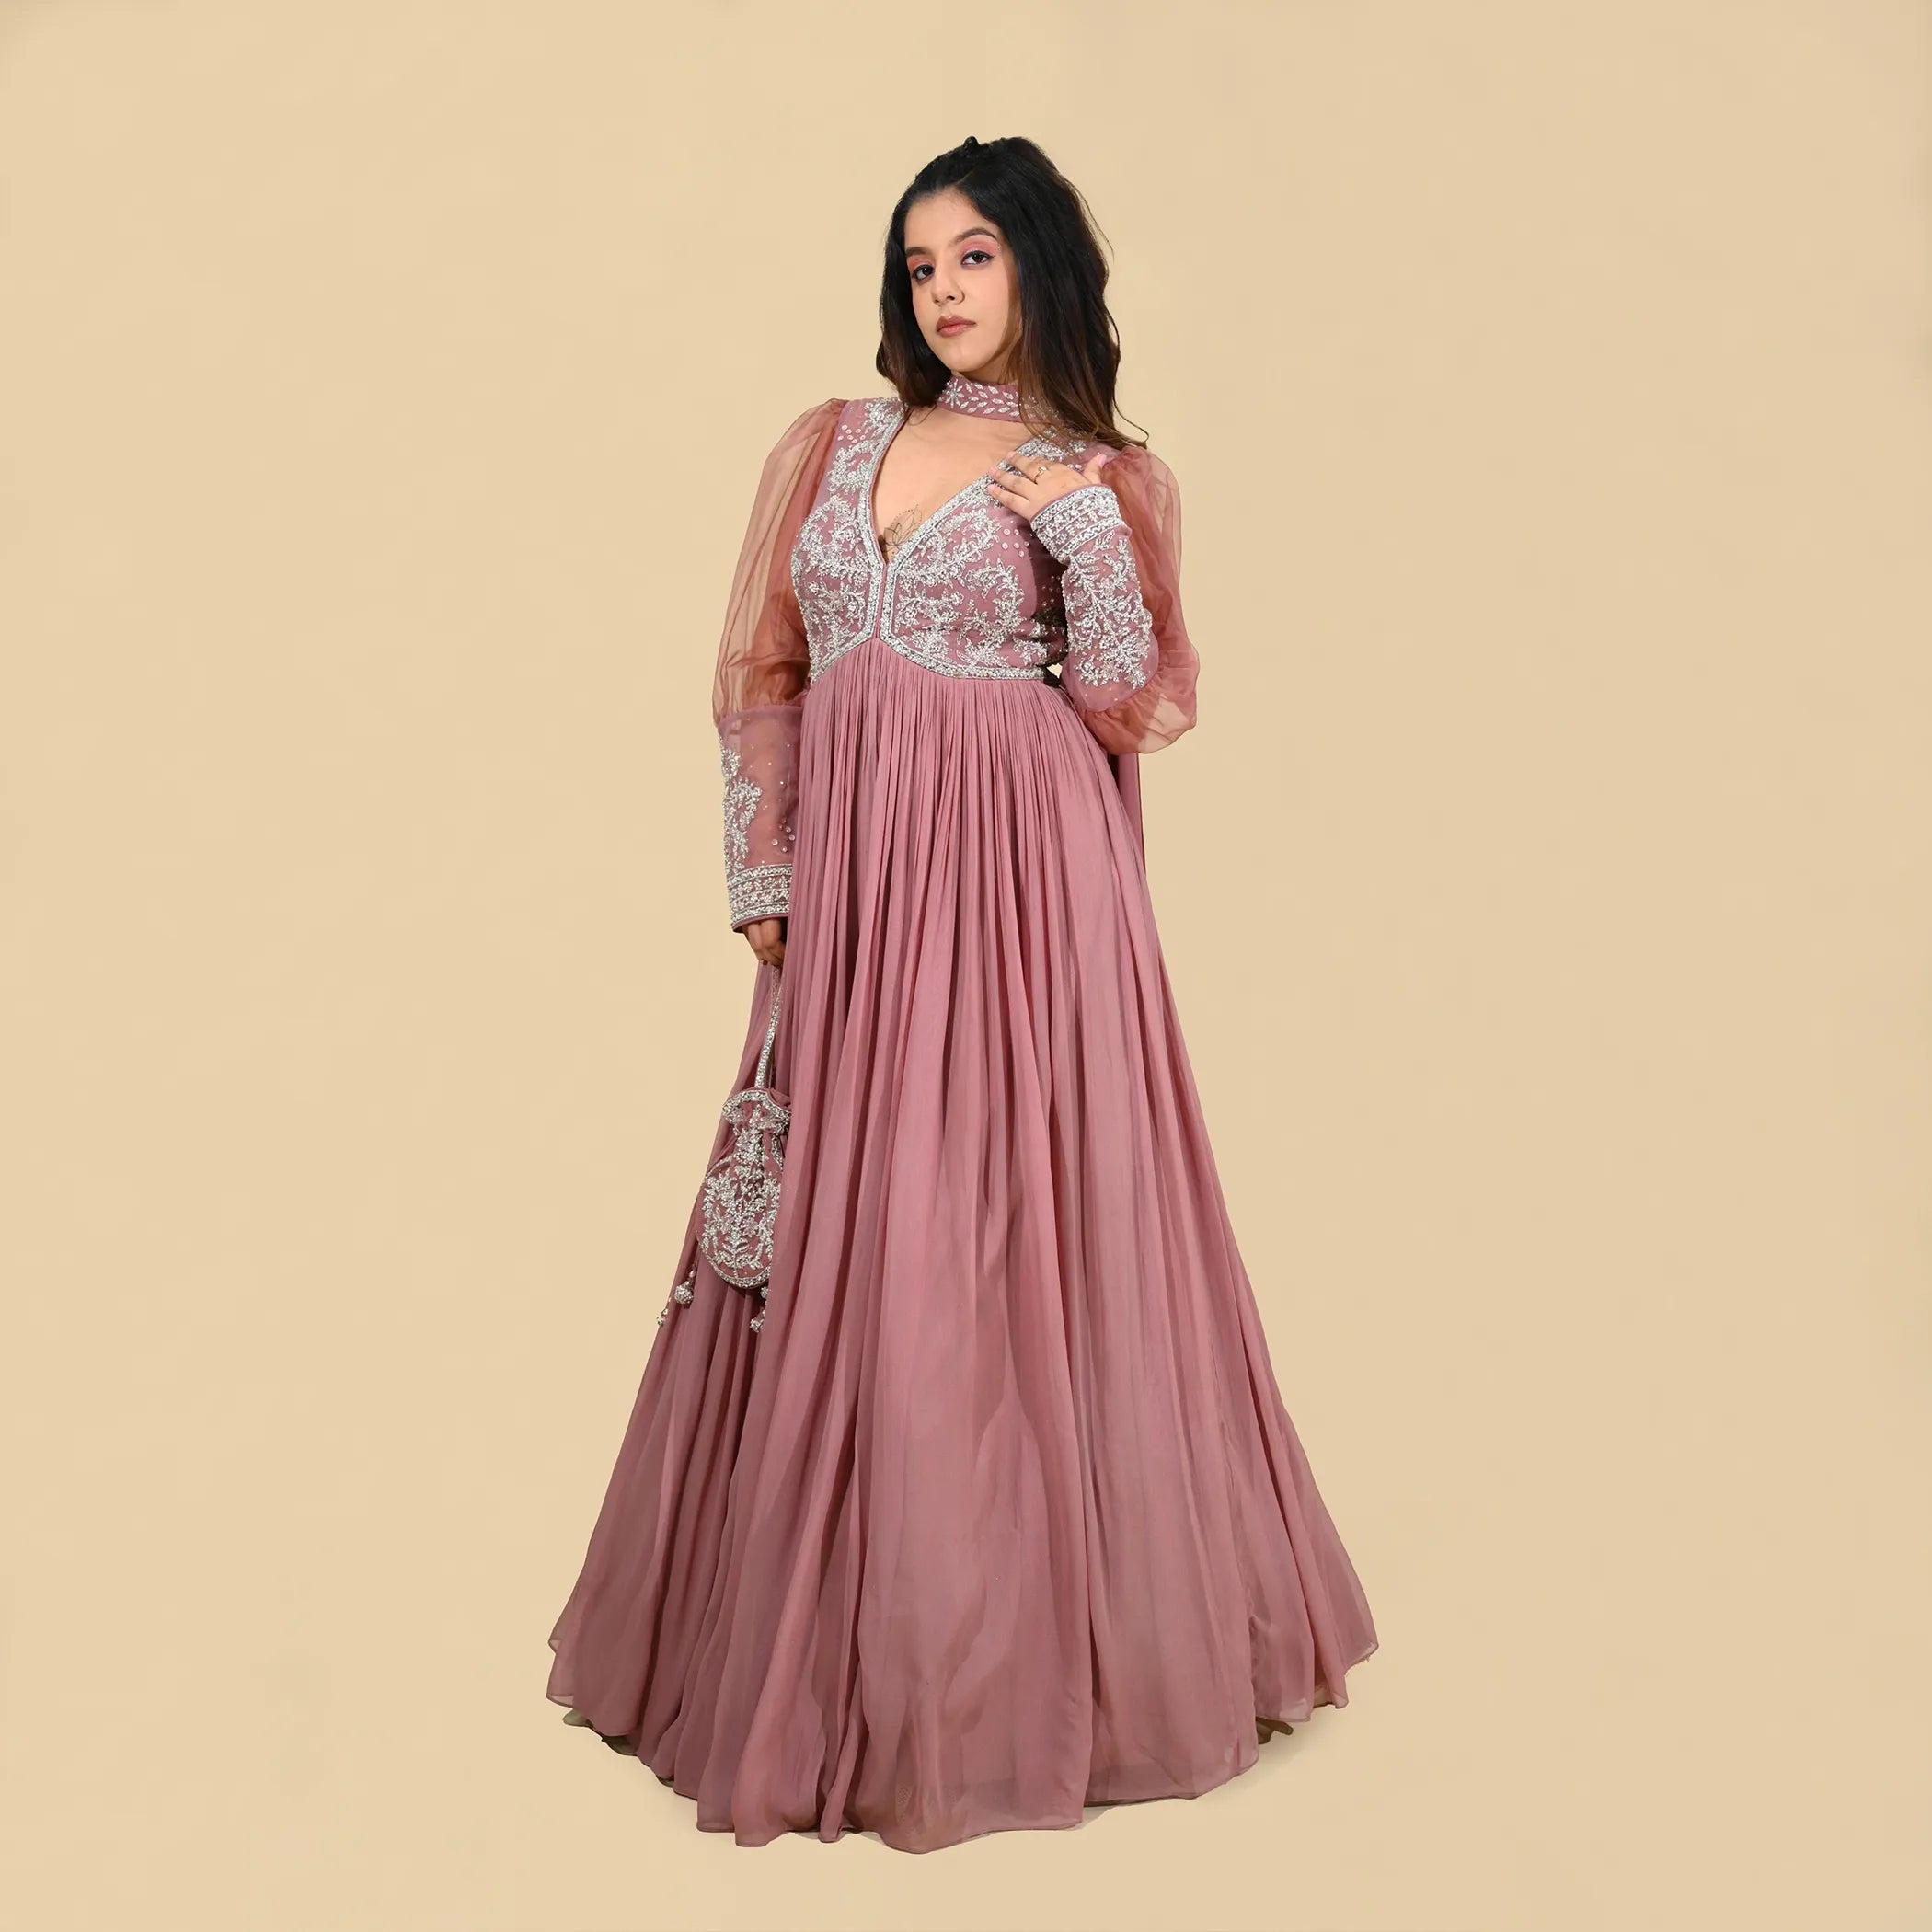 Mark Special Dresses for Karwa Chauth | Karwa Chauth Dresses